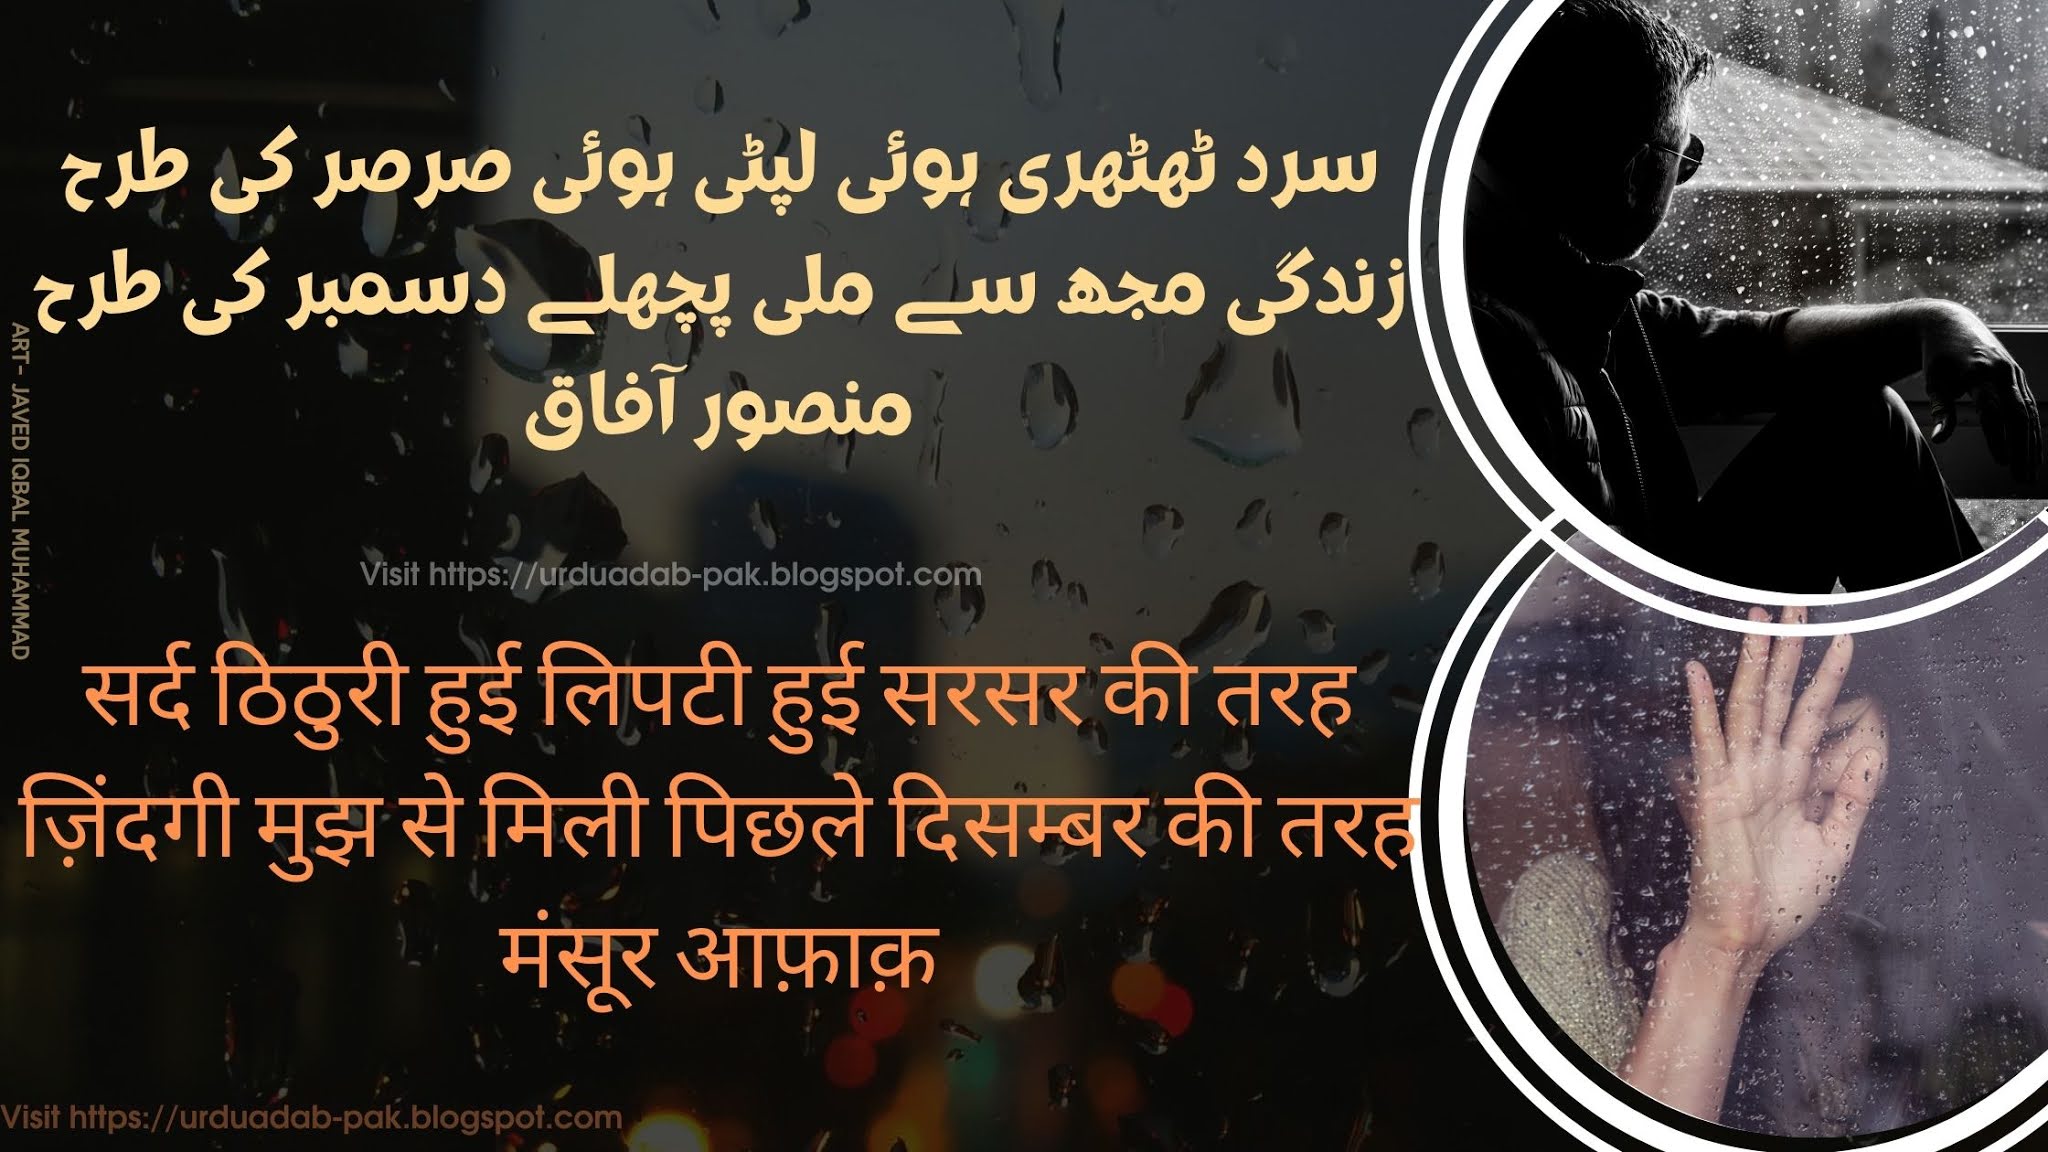 December Poetry, Sad & Love December Shayari | December poetry in Urdu Hindi Text |urdu poetry, poetry, Urdu poetry 2 lines | December Shayari  | December romantic poetry |december poetry in Urdu 2 lines | December love poetry in Urdu |December